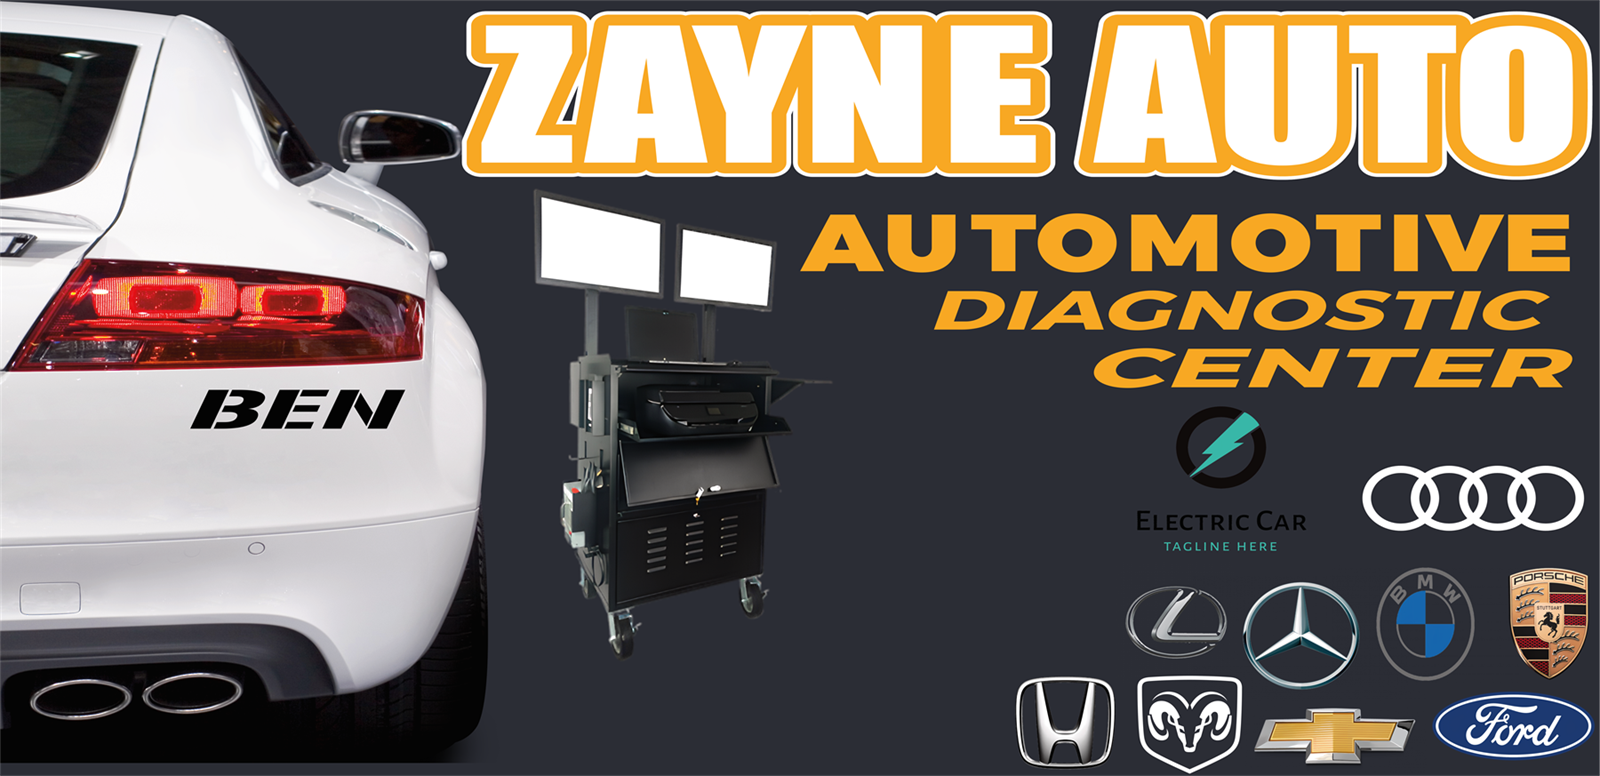 Zayne auto services